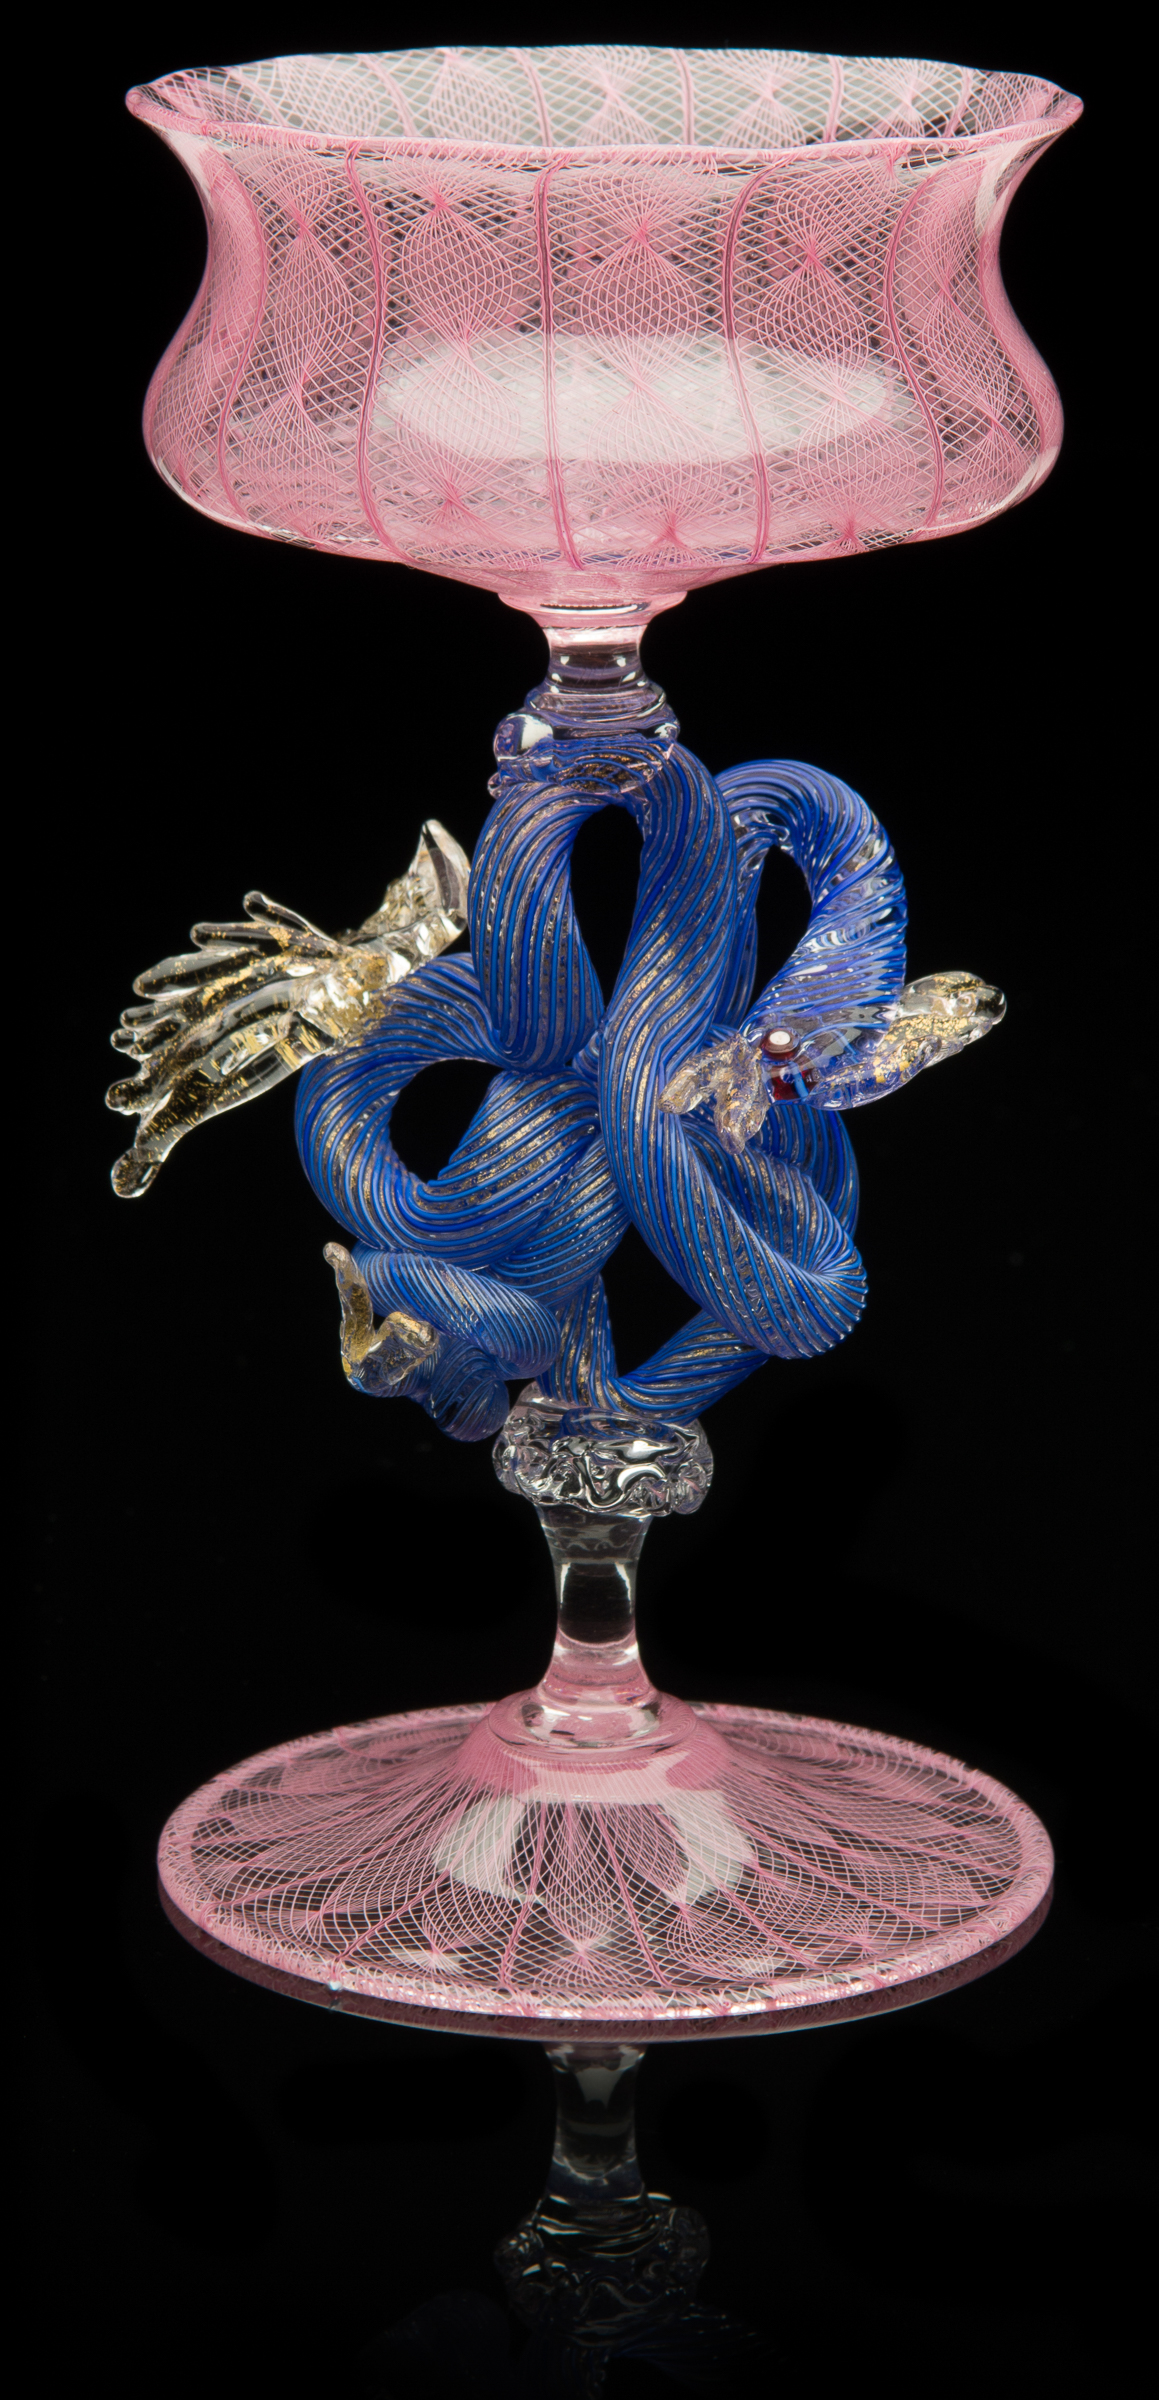  Lino Tagliapietra,  Serpent-stem&nbsp;  Goblet&nbsp; (1991-1994, glass, 5 5/16 x 3 5/8 x 3 5/8 inches), LT.51 